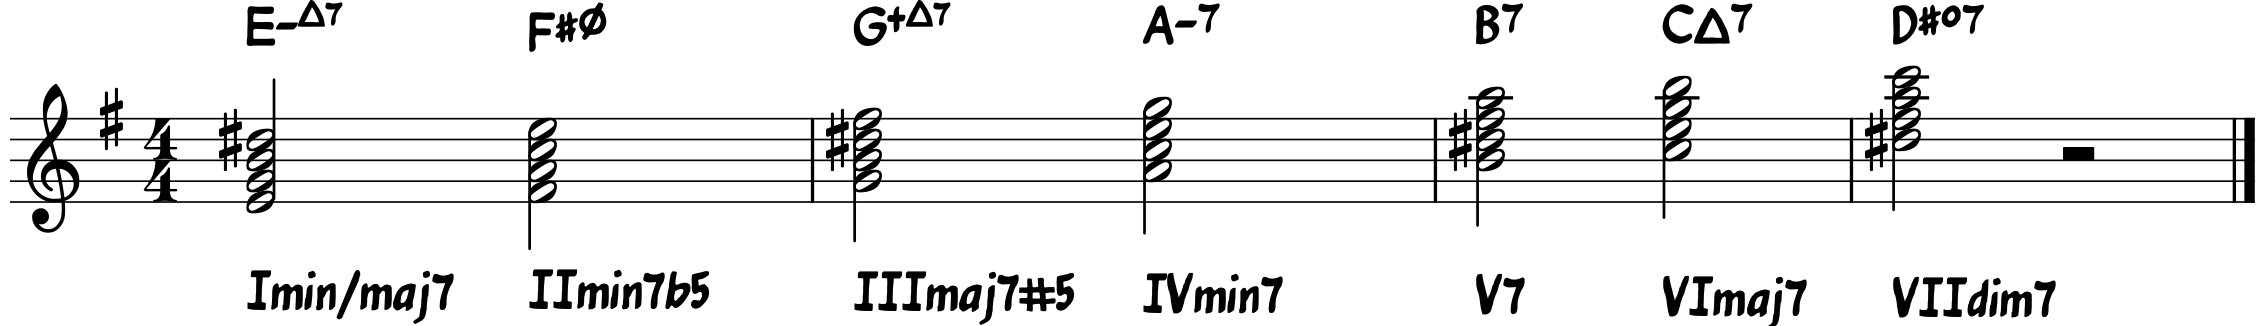 Harmonic minor scale formula - vsabrick